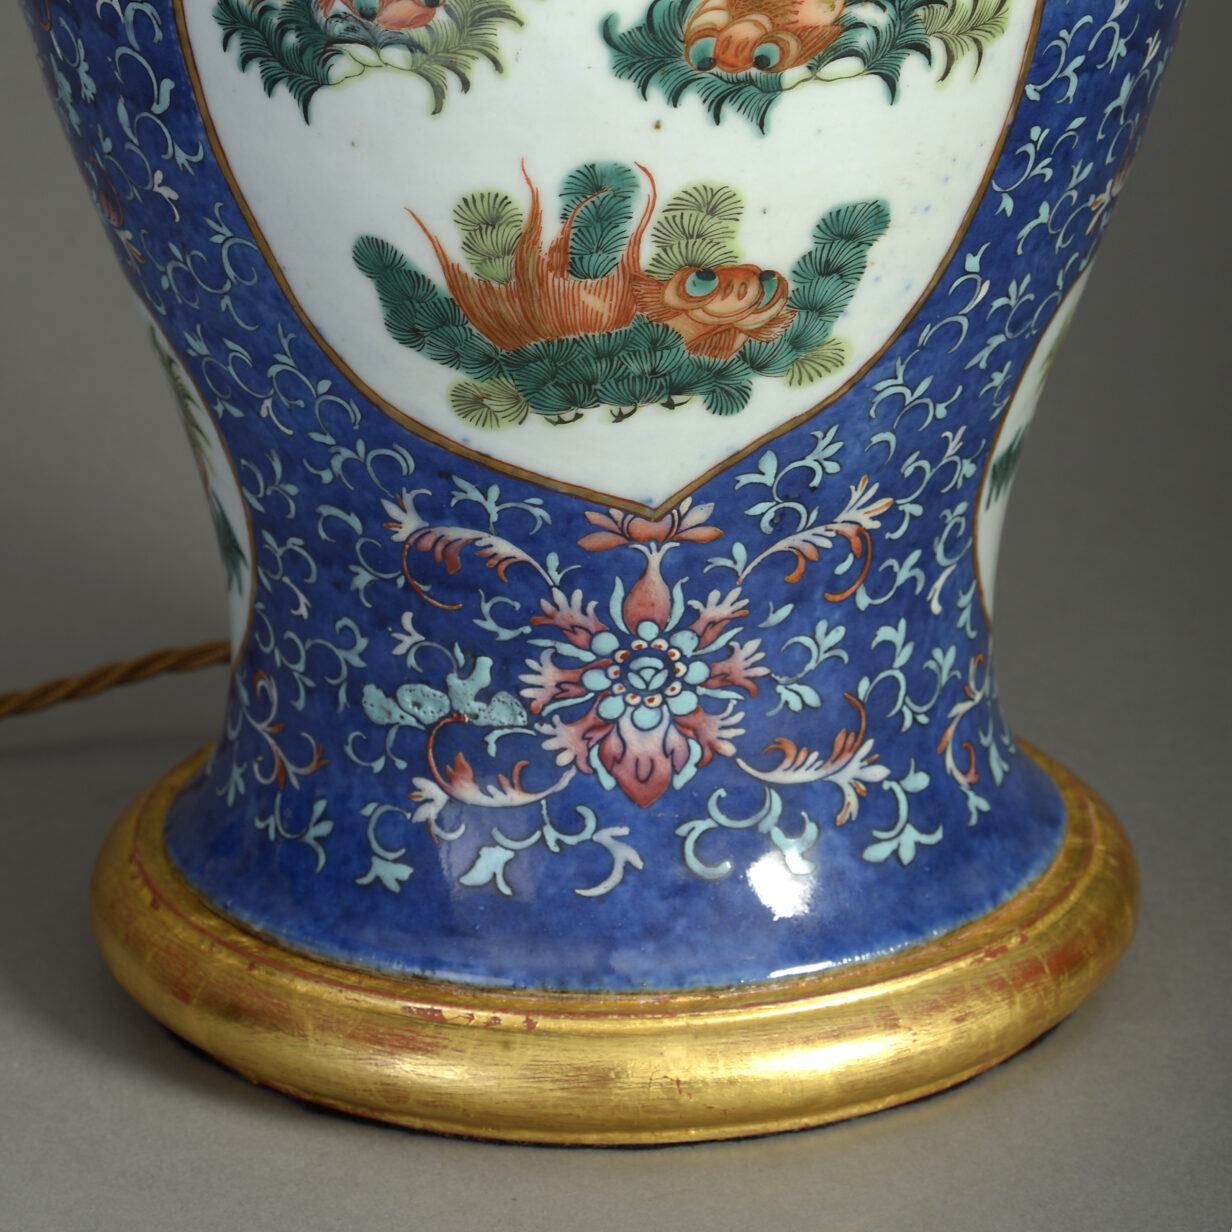 Blue ground porcelain vase lamp